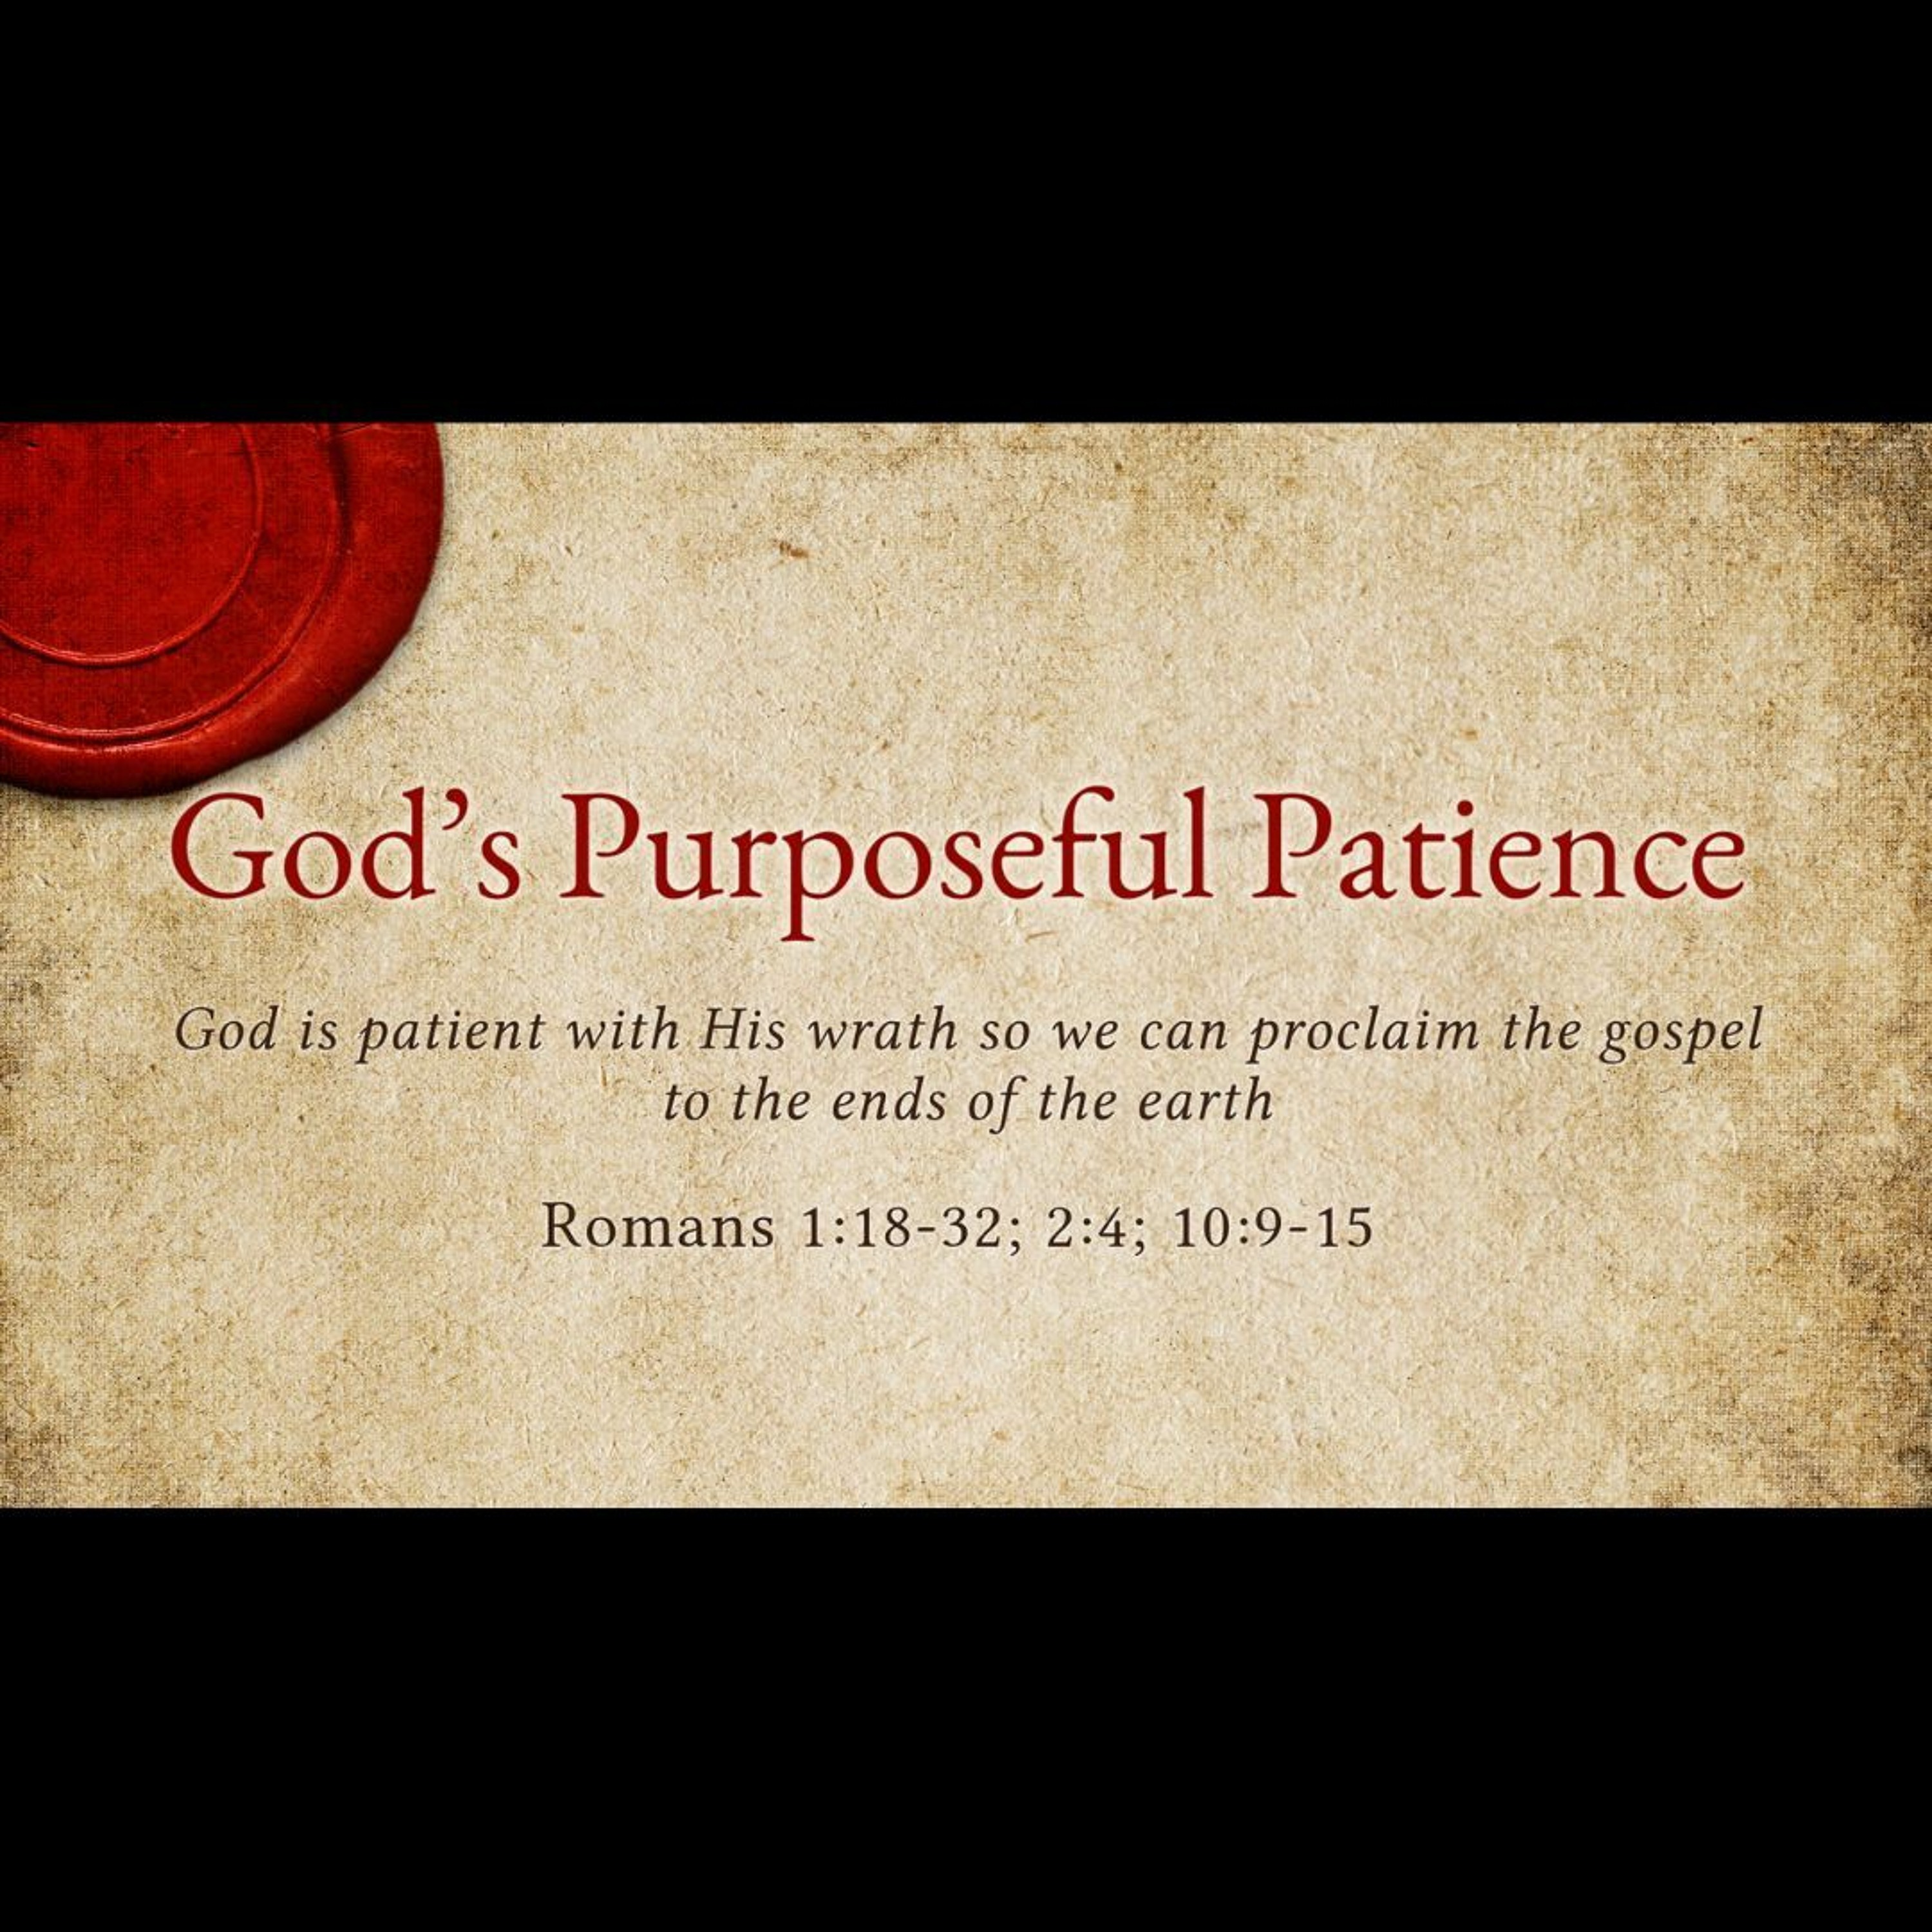 God's Purposeful Patience (Romans 1:18-32, 2:4, 10:9-15)